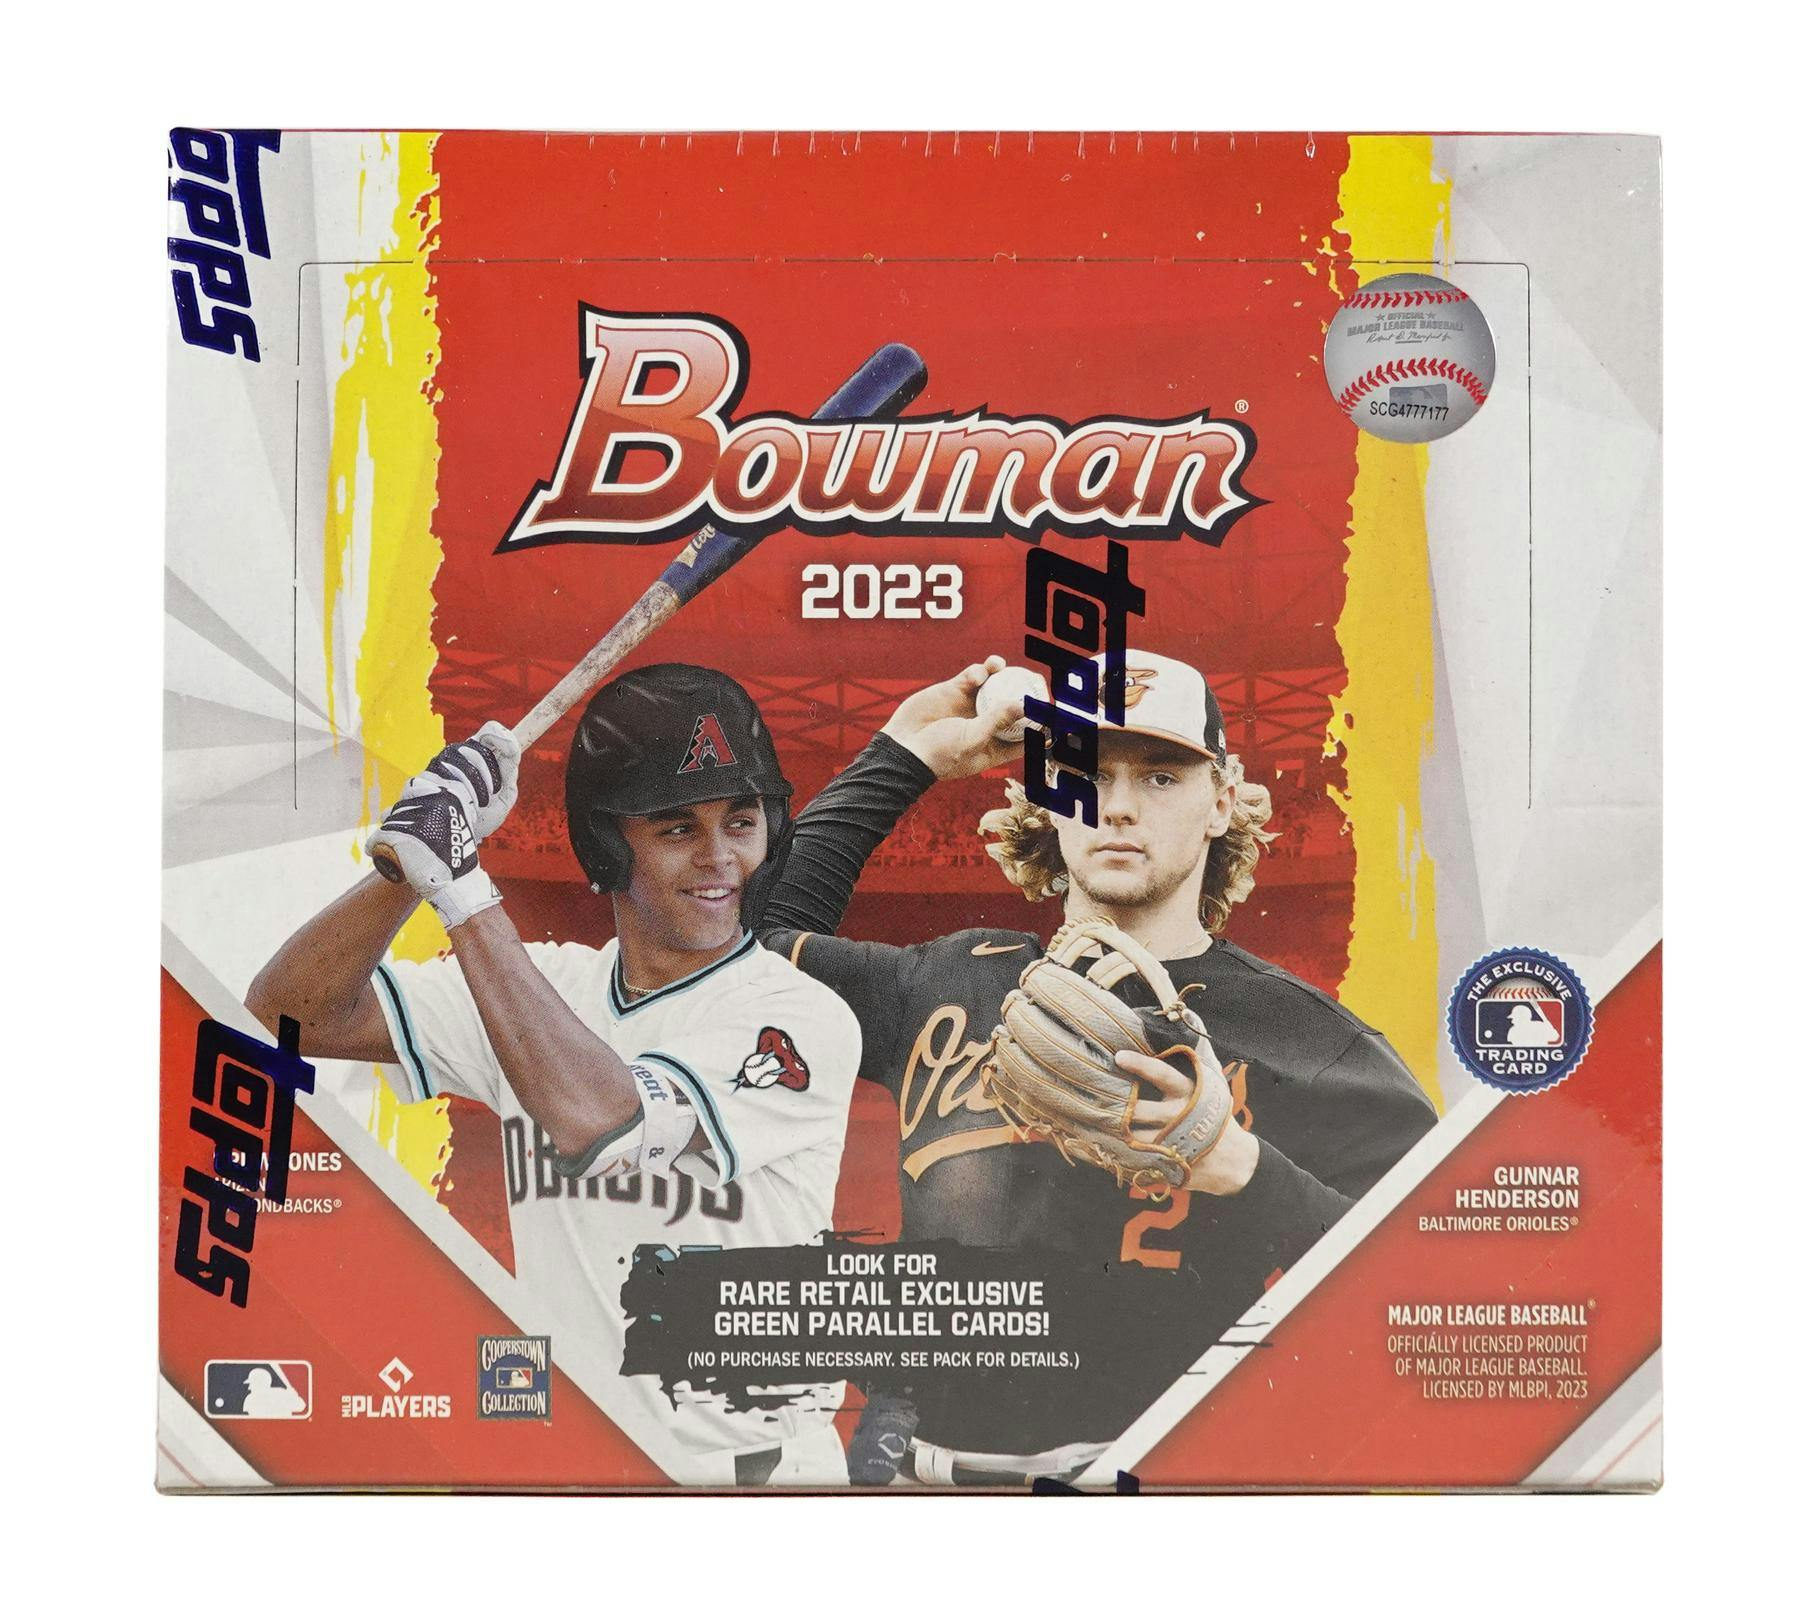 St. Louis Cardinals 2023 Bowman Series 10 Card Team Set made by Topps